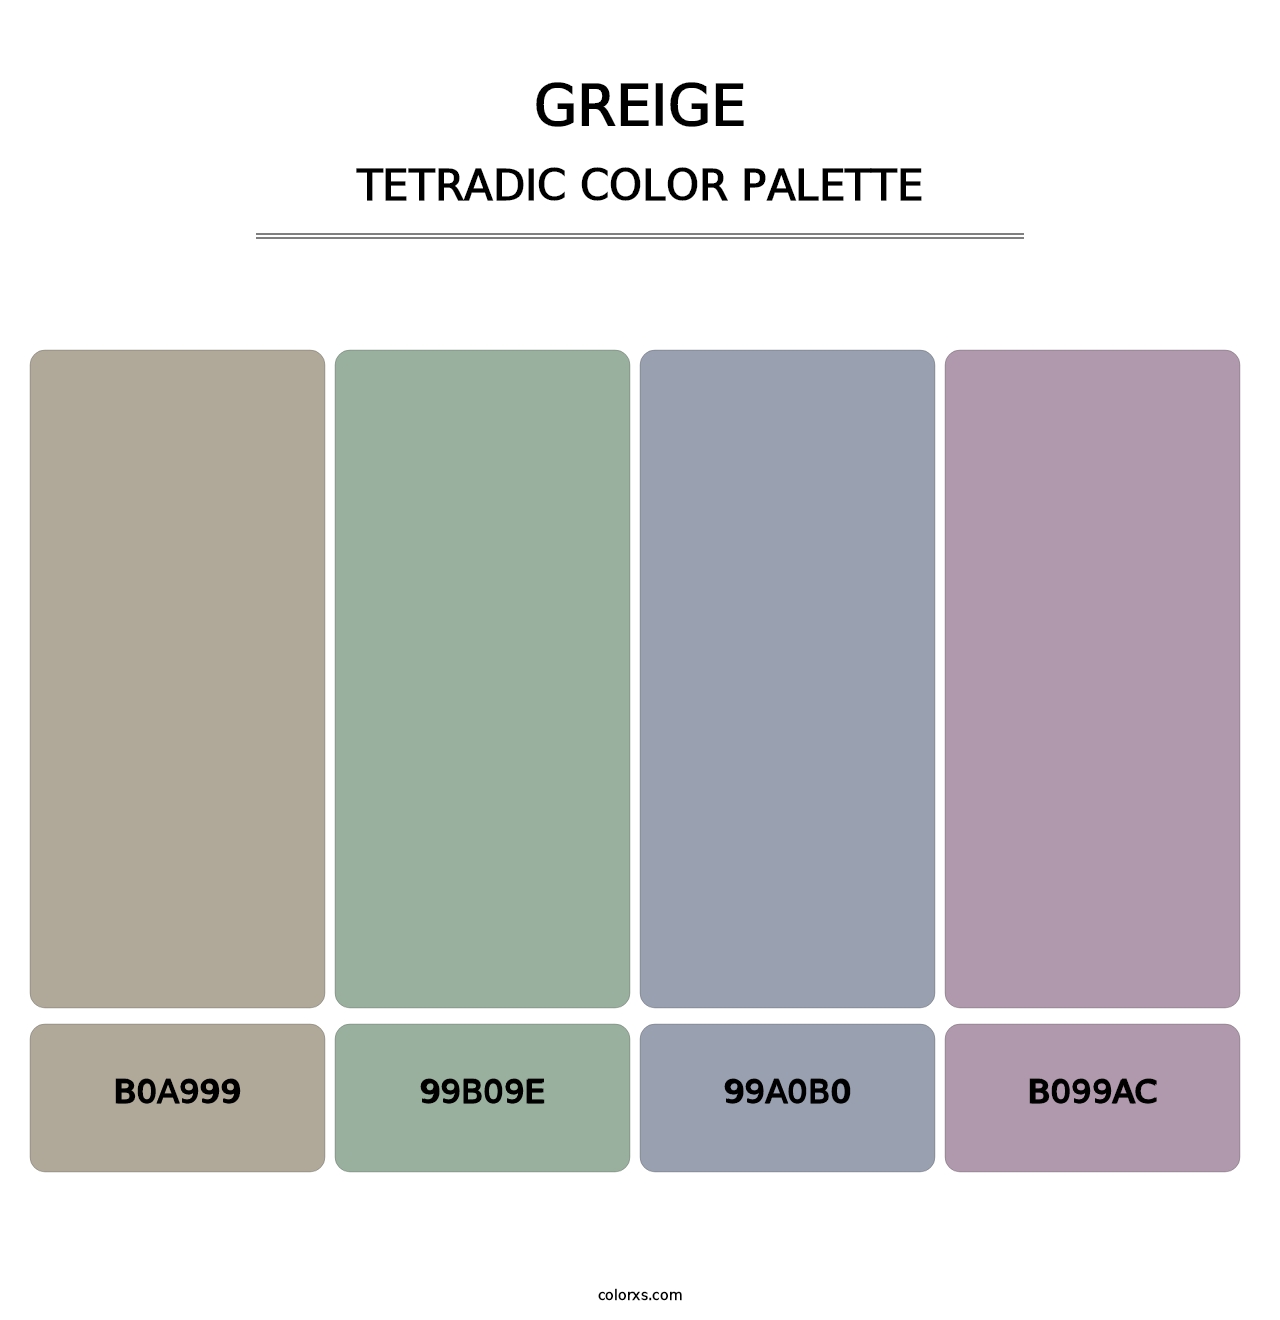 Greige - Tetradic Color Palette